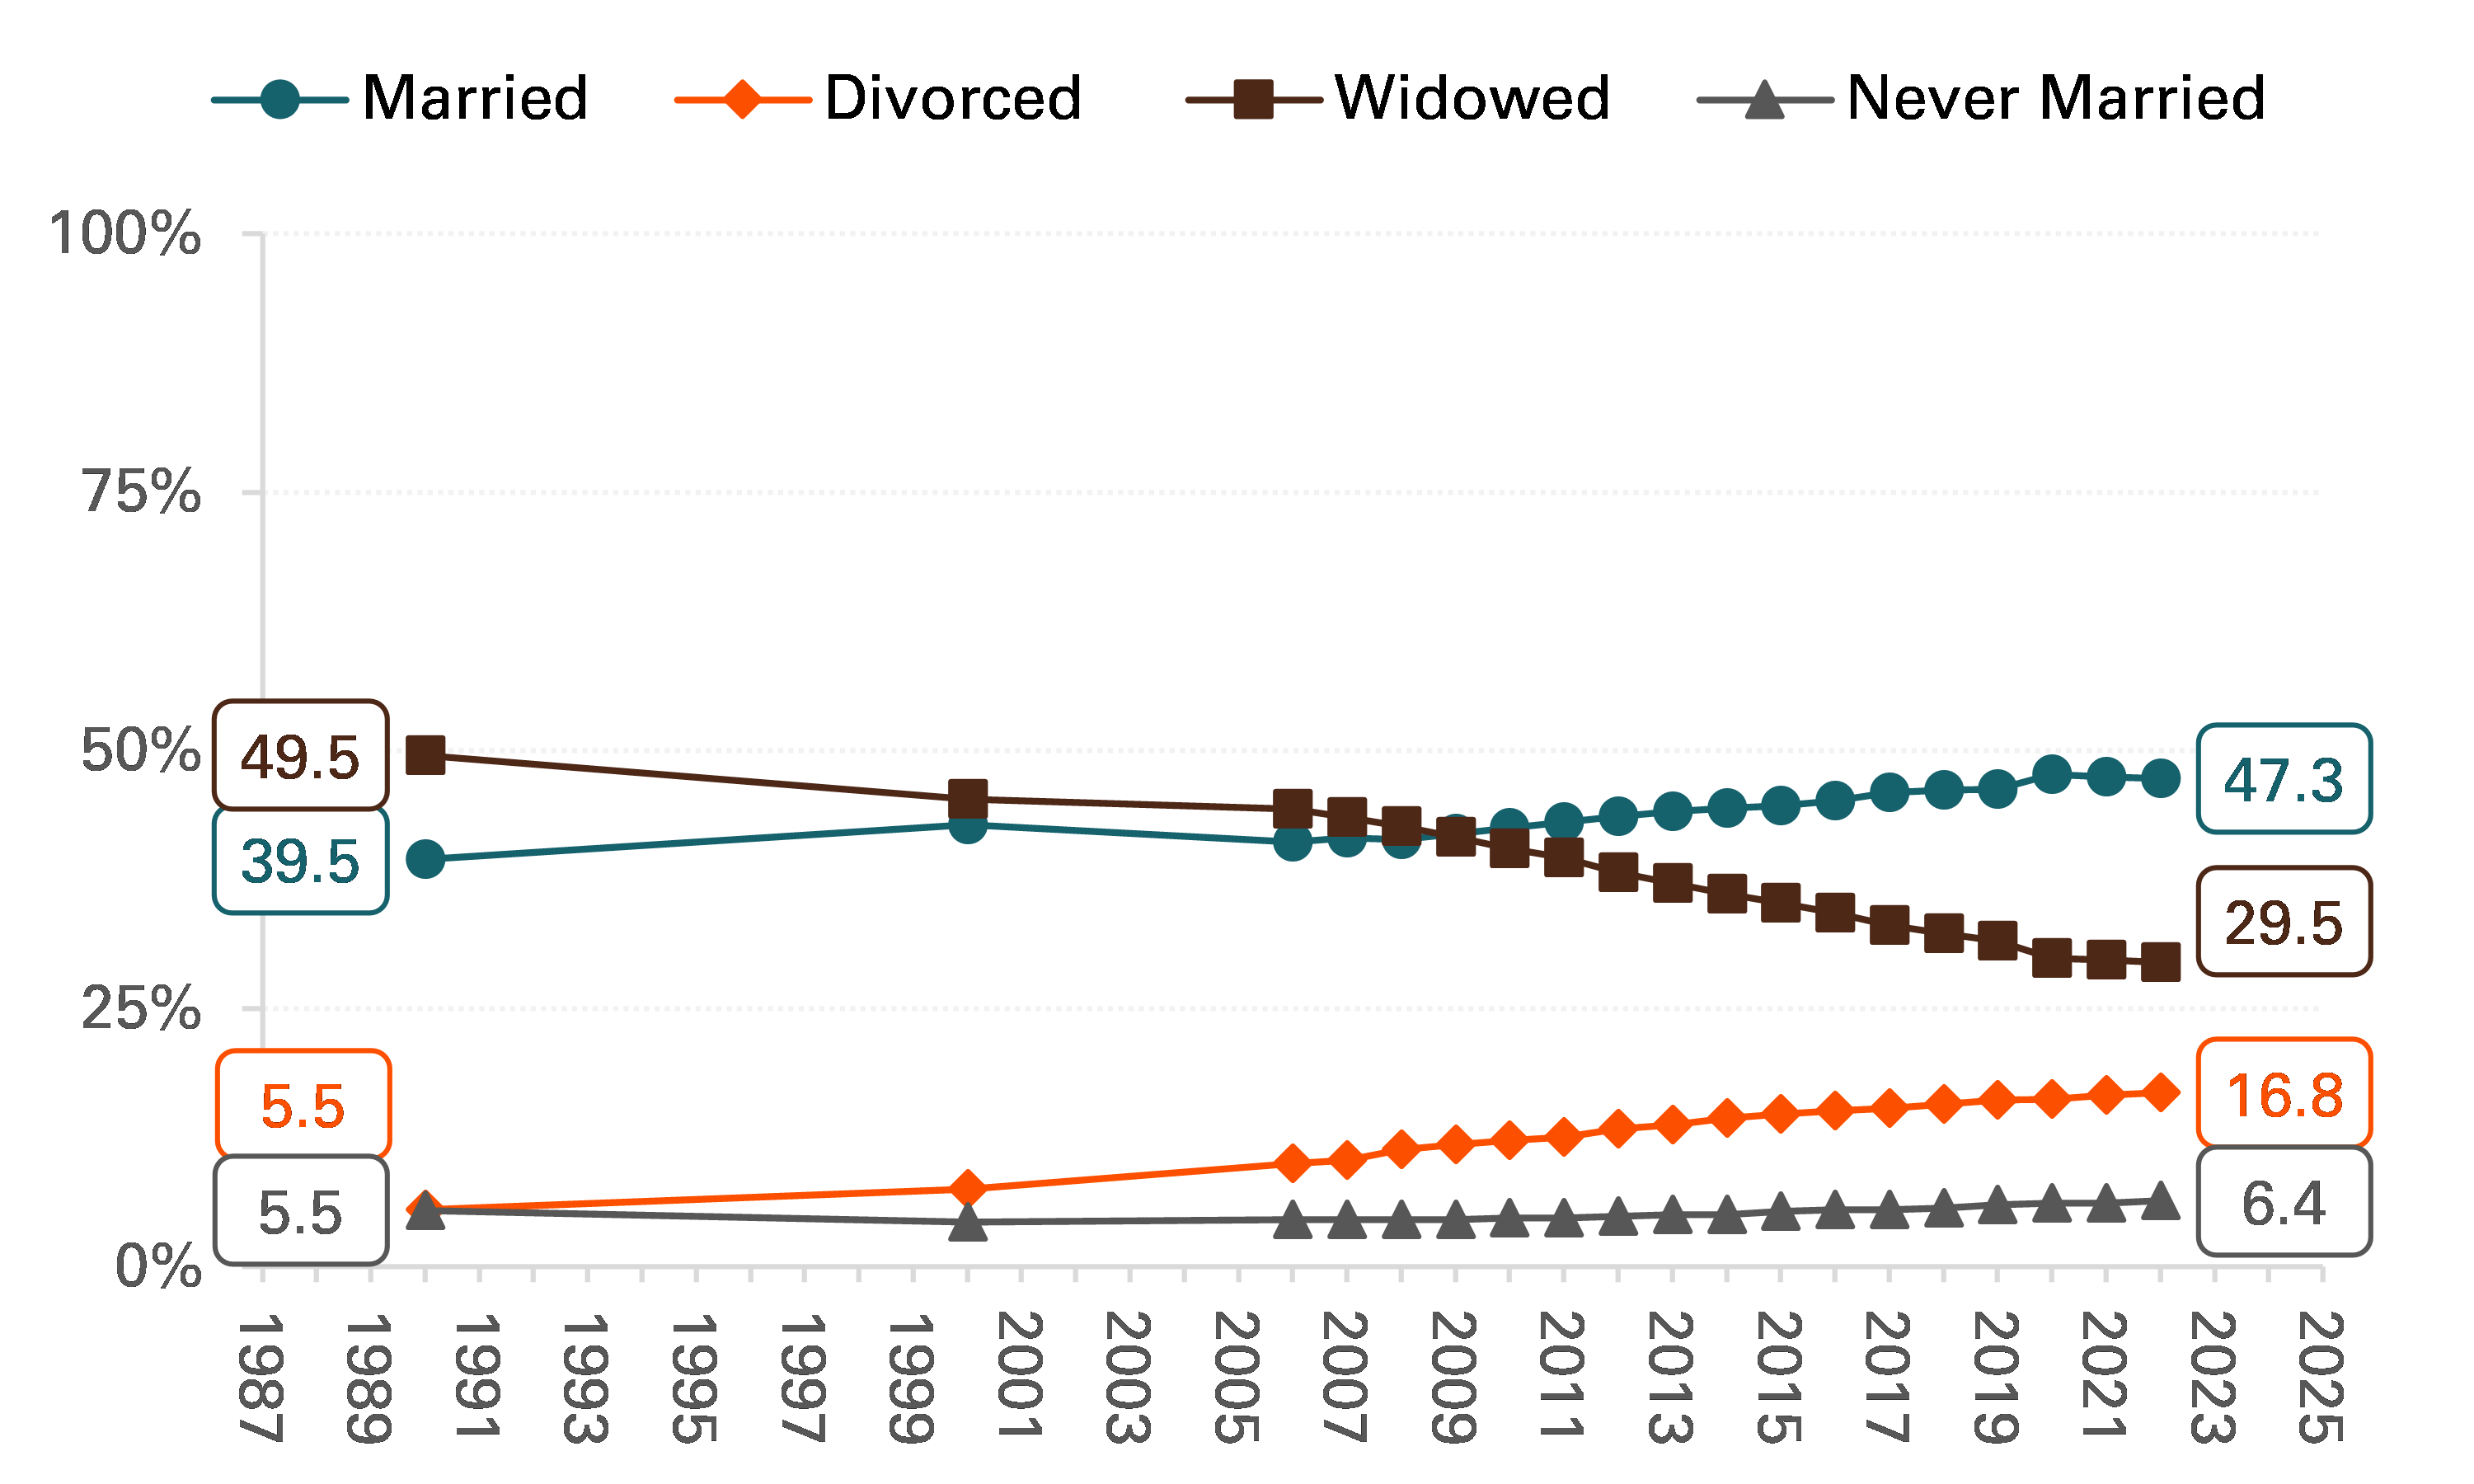 Figure 3. Distribution of Marital Status among U.S. Women Aged 65 and Older, 1990, 2000, & 2006-2022